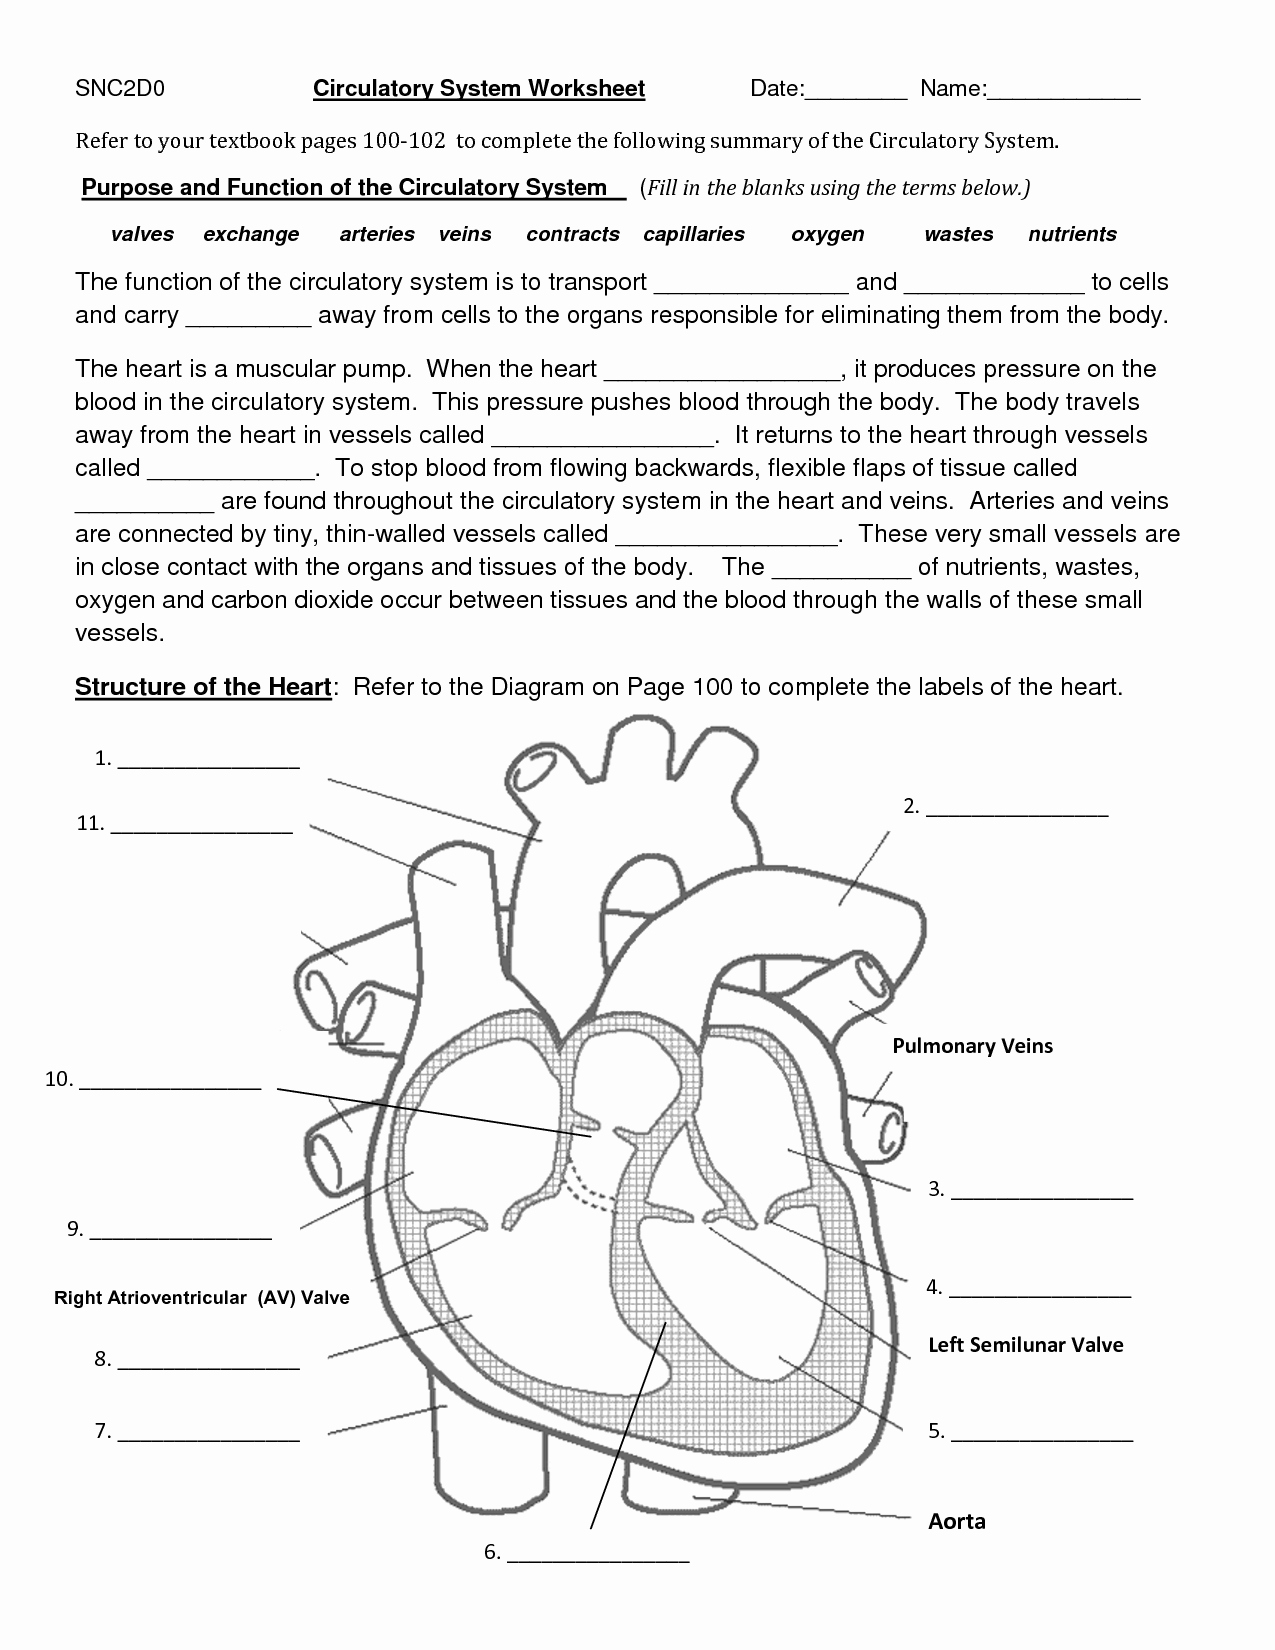 Circulatory System Worksheet Answers Elegant Circulatory System Worksheet Worksheet